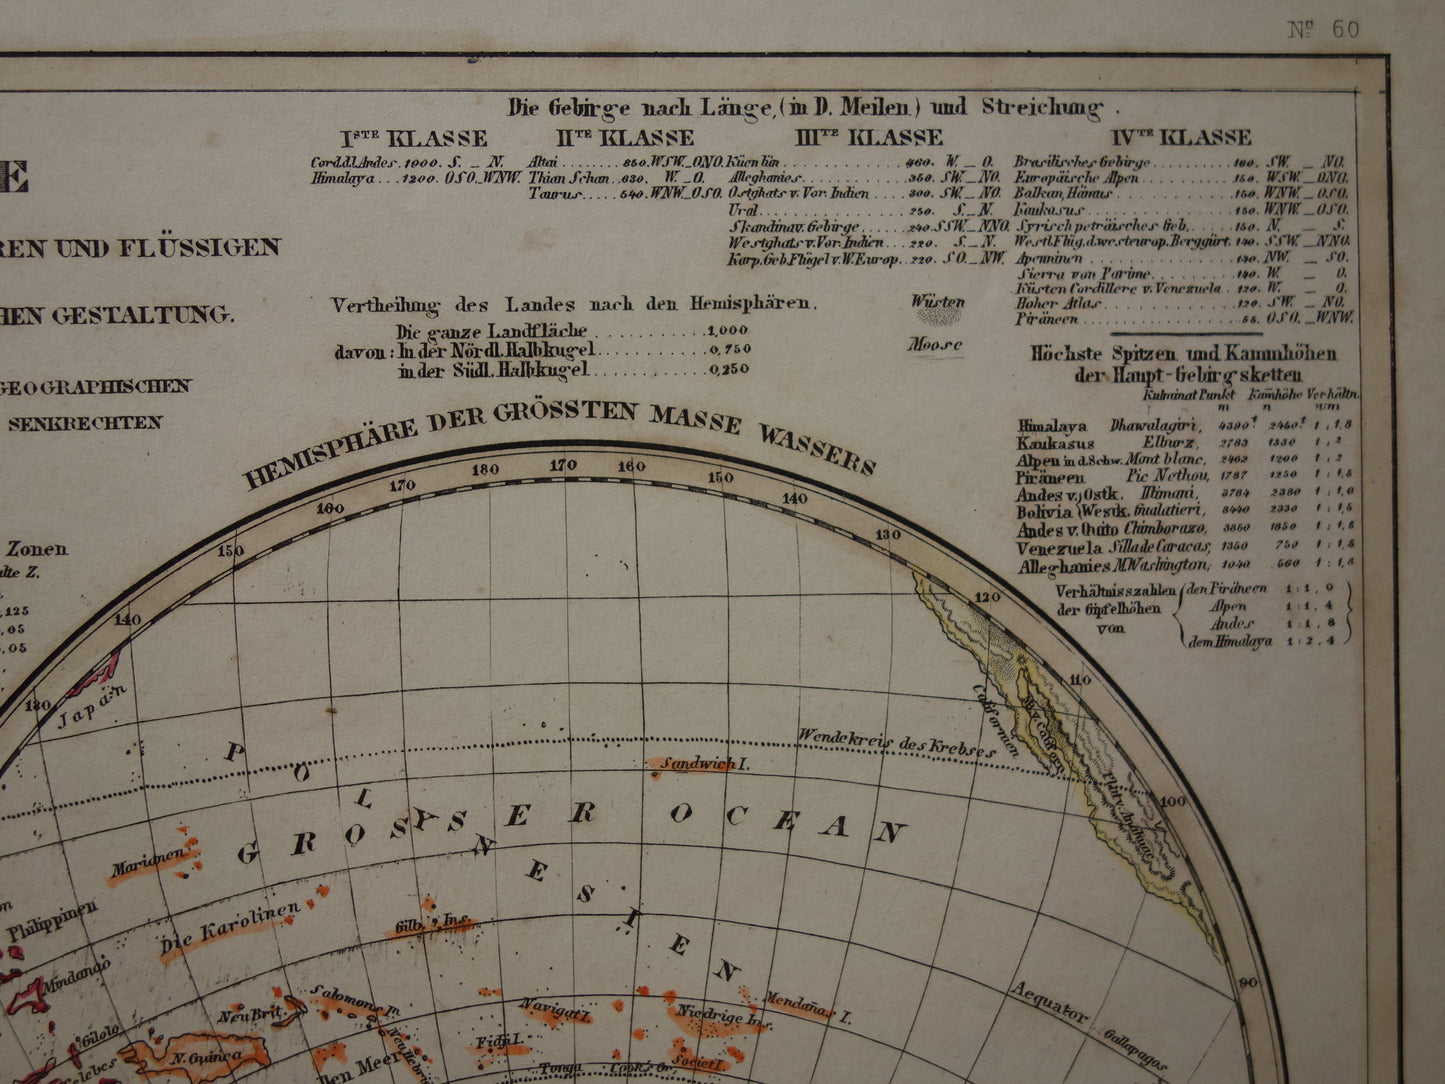 WERELDKAART oude kaart van de wereld 1849 originele antieke geologie dubbele hemisfeer landkaart watermassa en landmassa